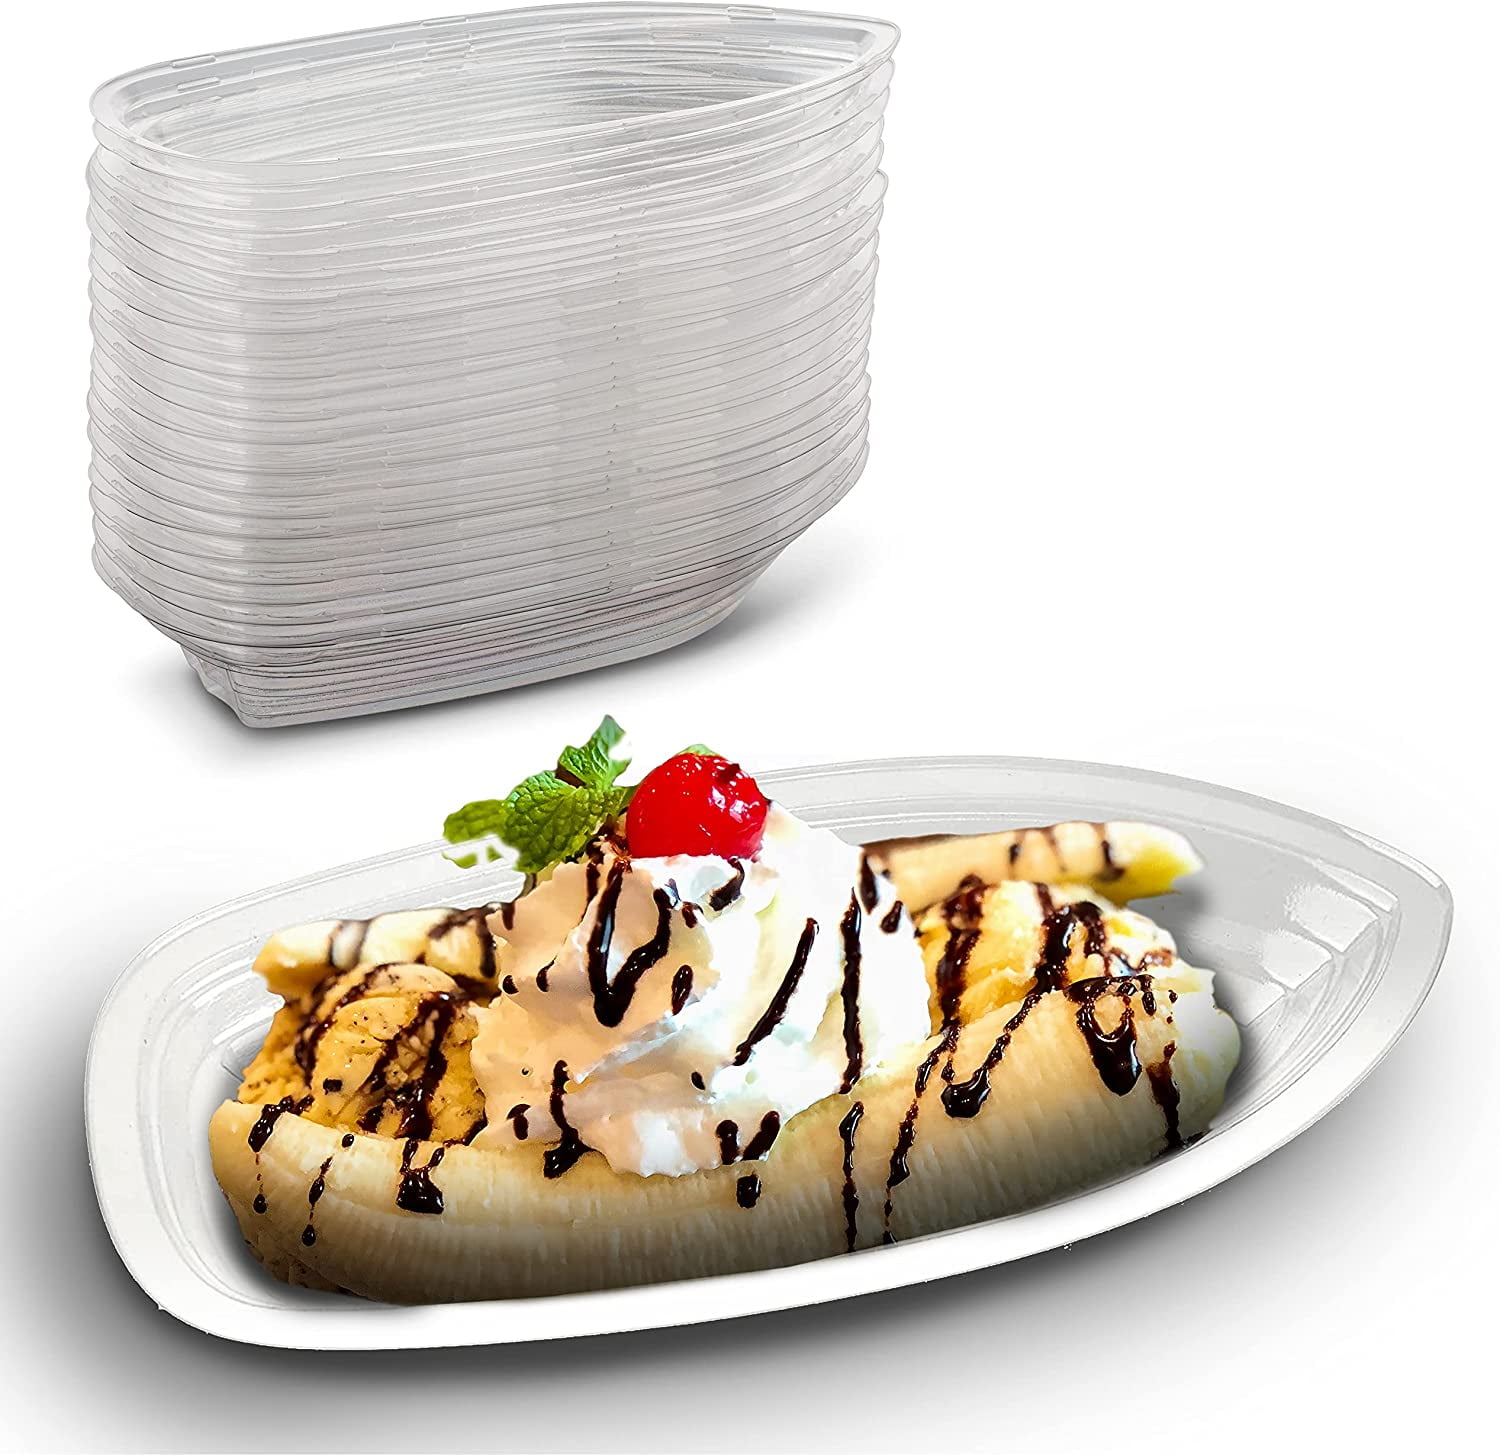 4x Small Bowl Re-usable Plastic Clear Swirl Design Dessert Ice Cream Sundae